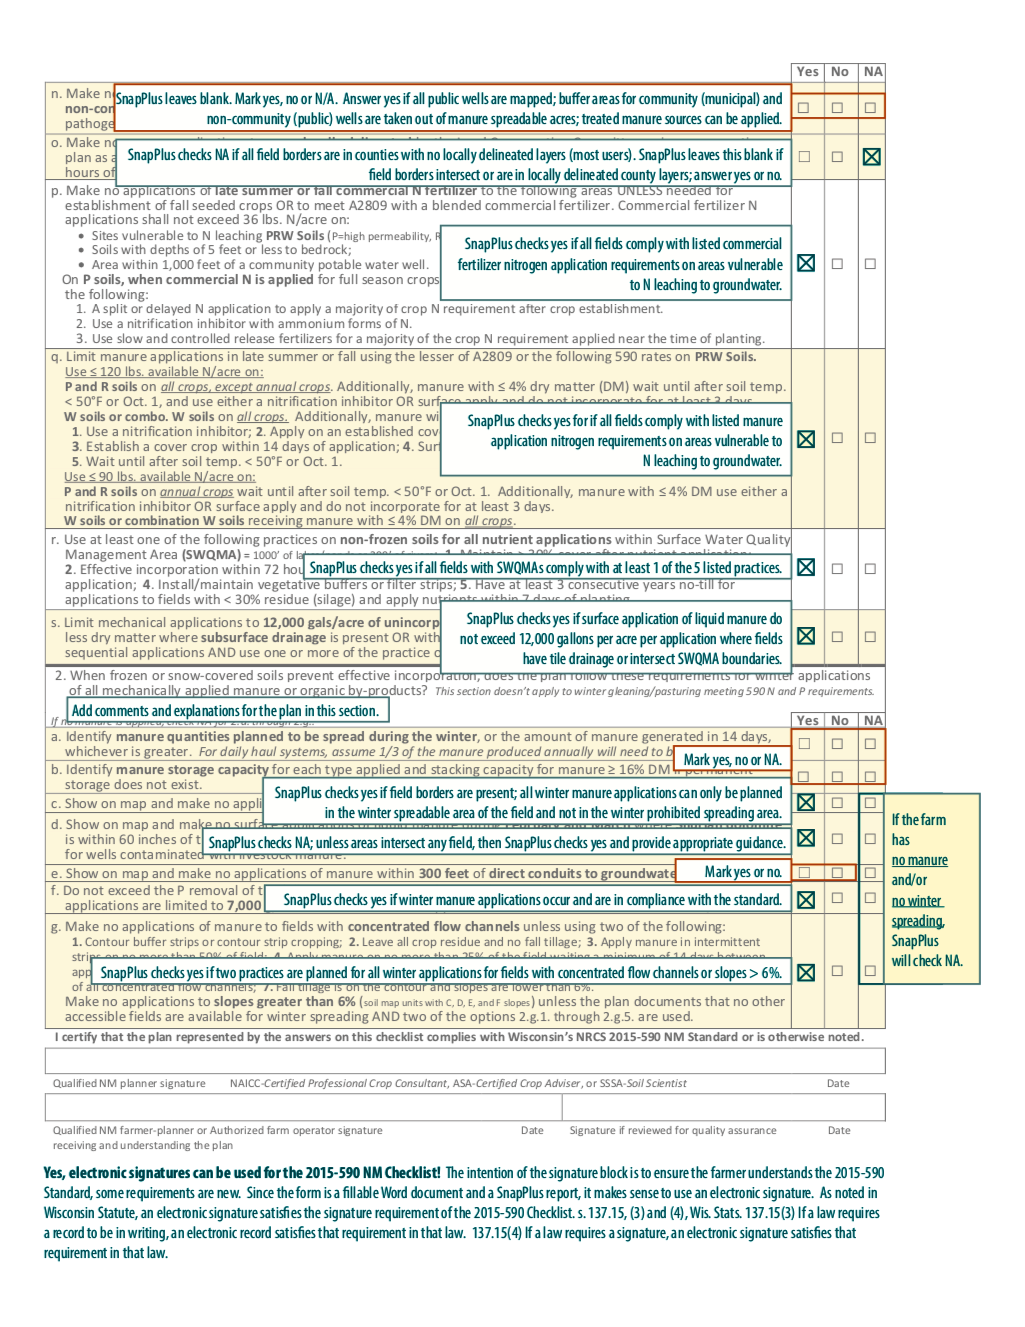 Reports-590-checklist-pg2